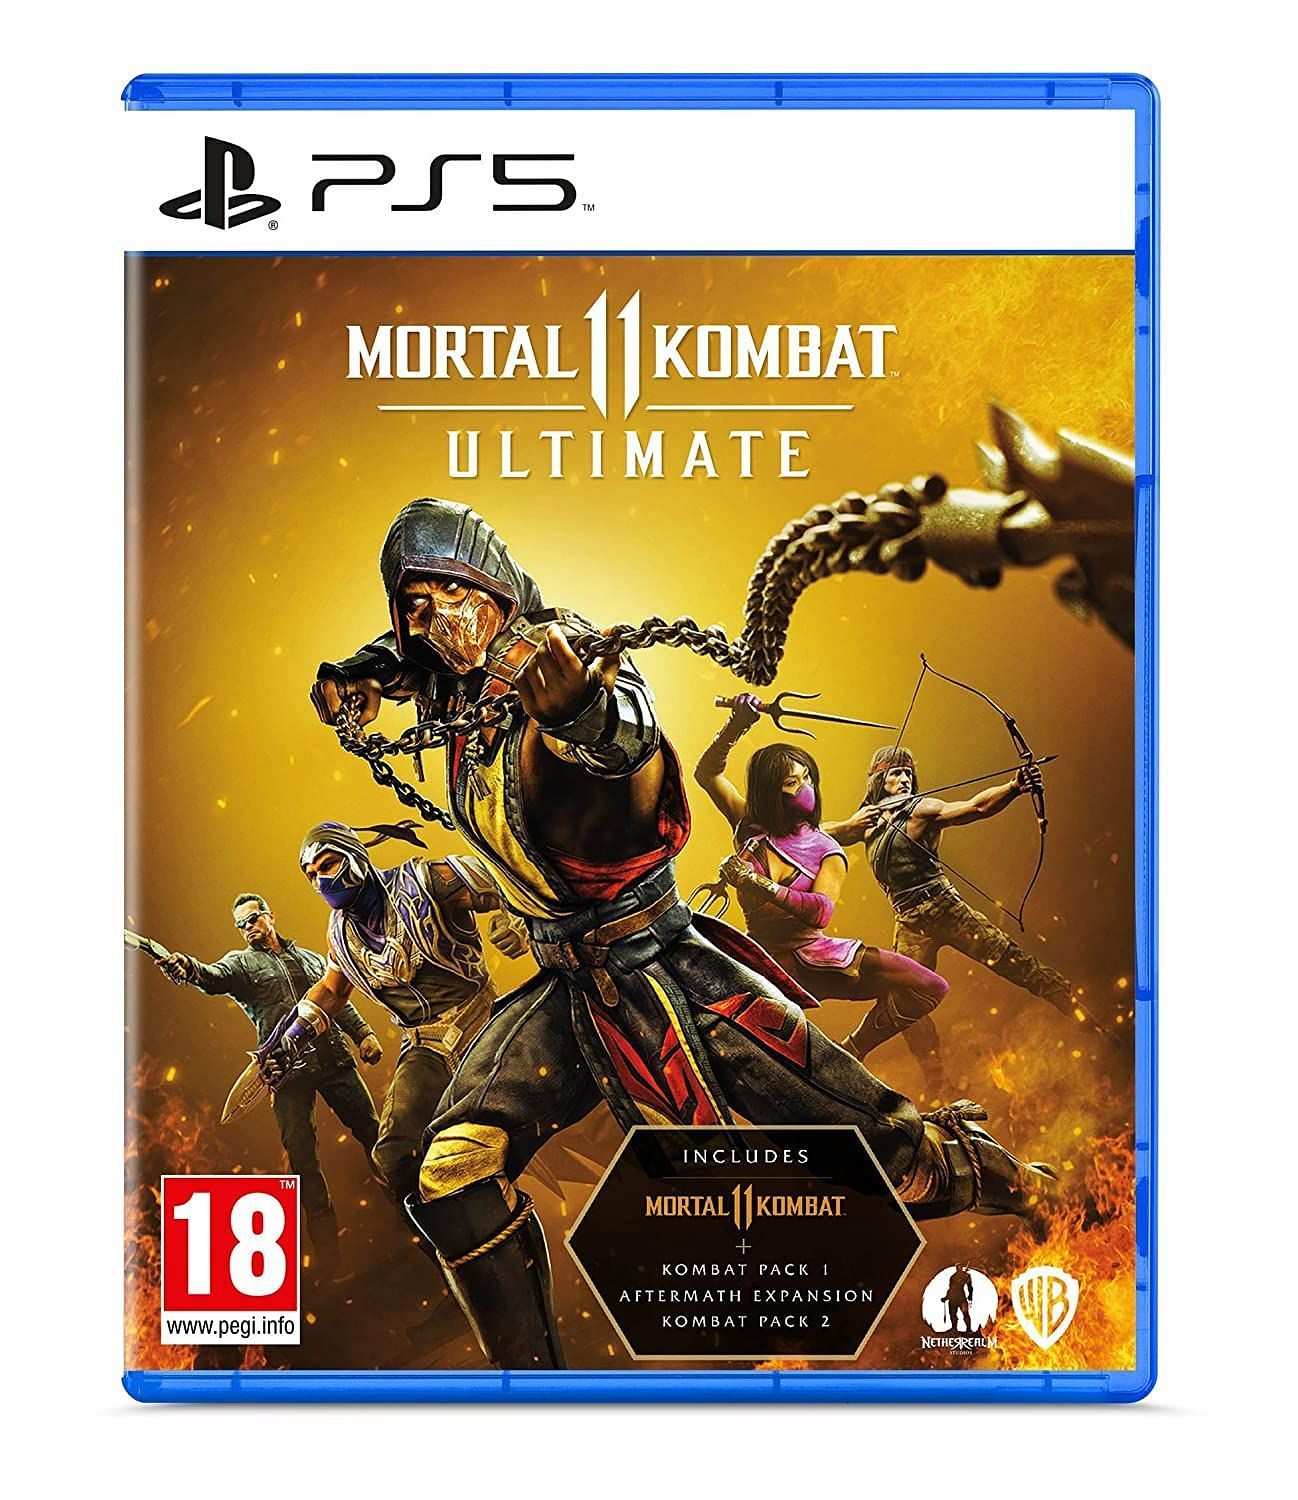 Mortal Kombat 11 Ultimate Edition via amazon.com